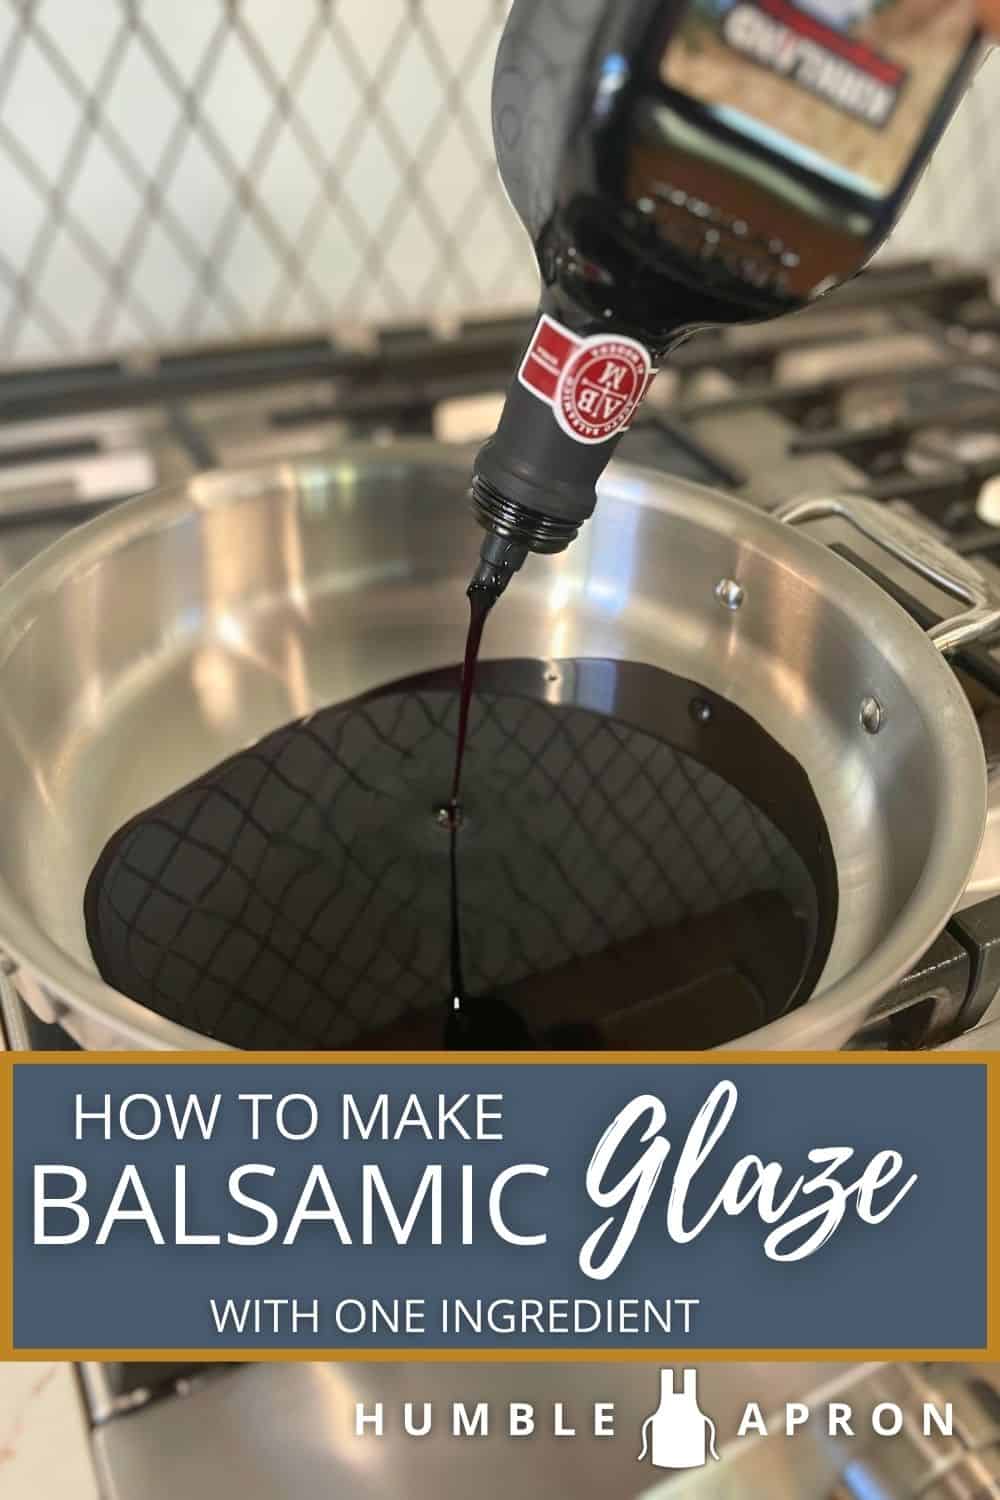 Balsamic vinegar poured into a pan